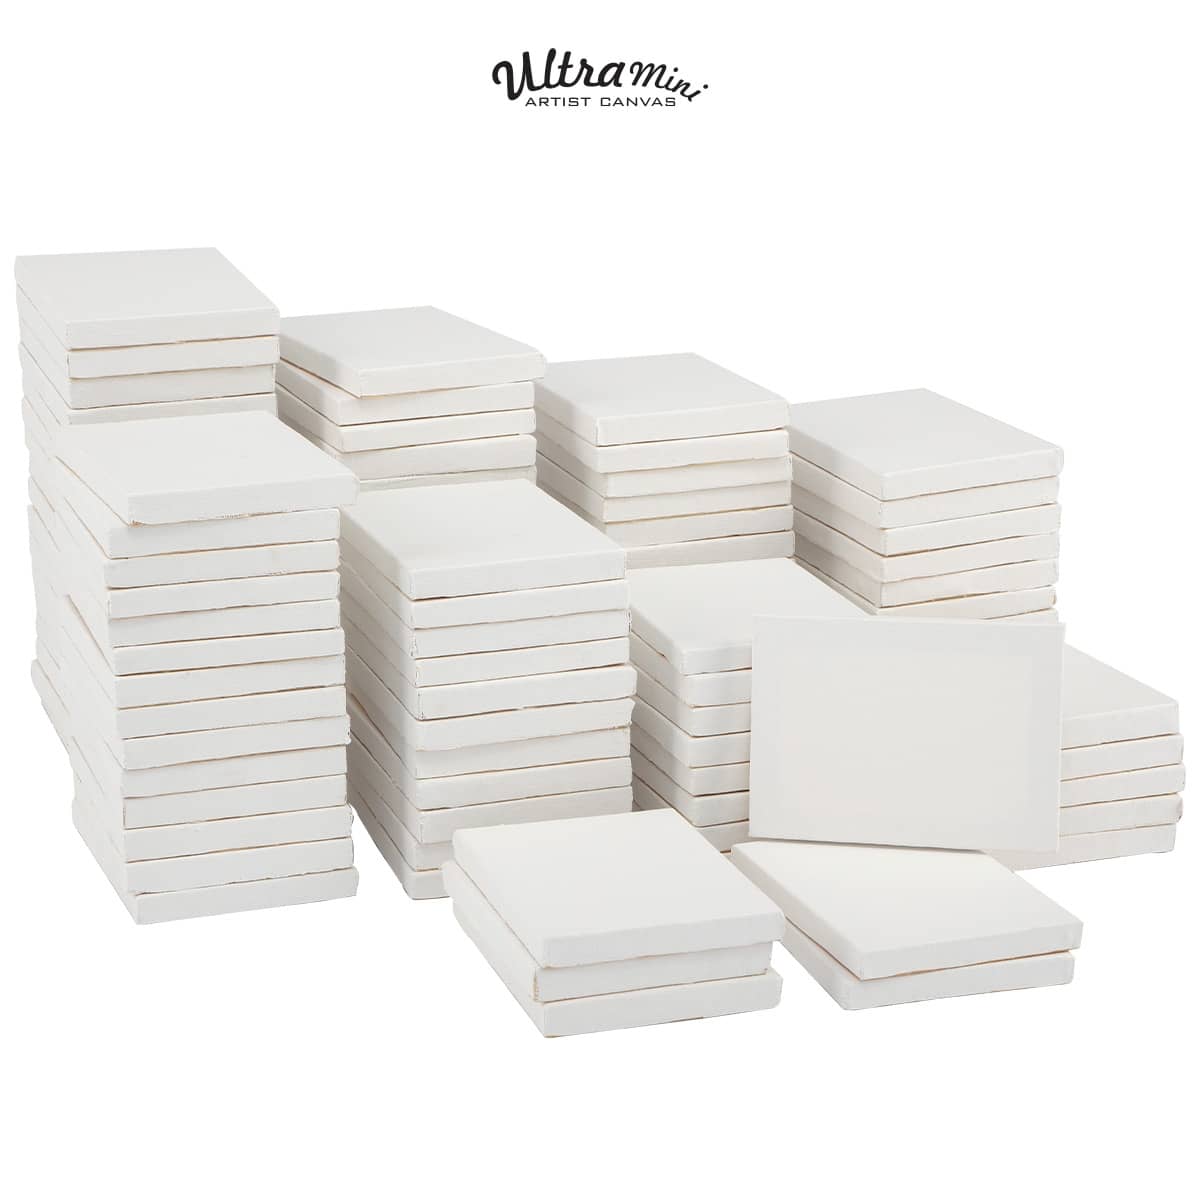 Ultra Mini Cotton Canvas - Boxes of 100